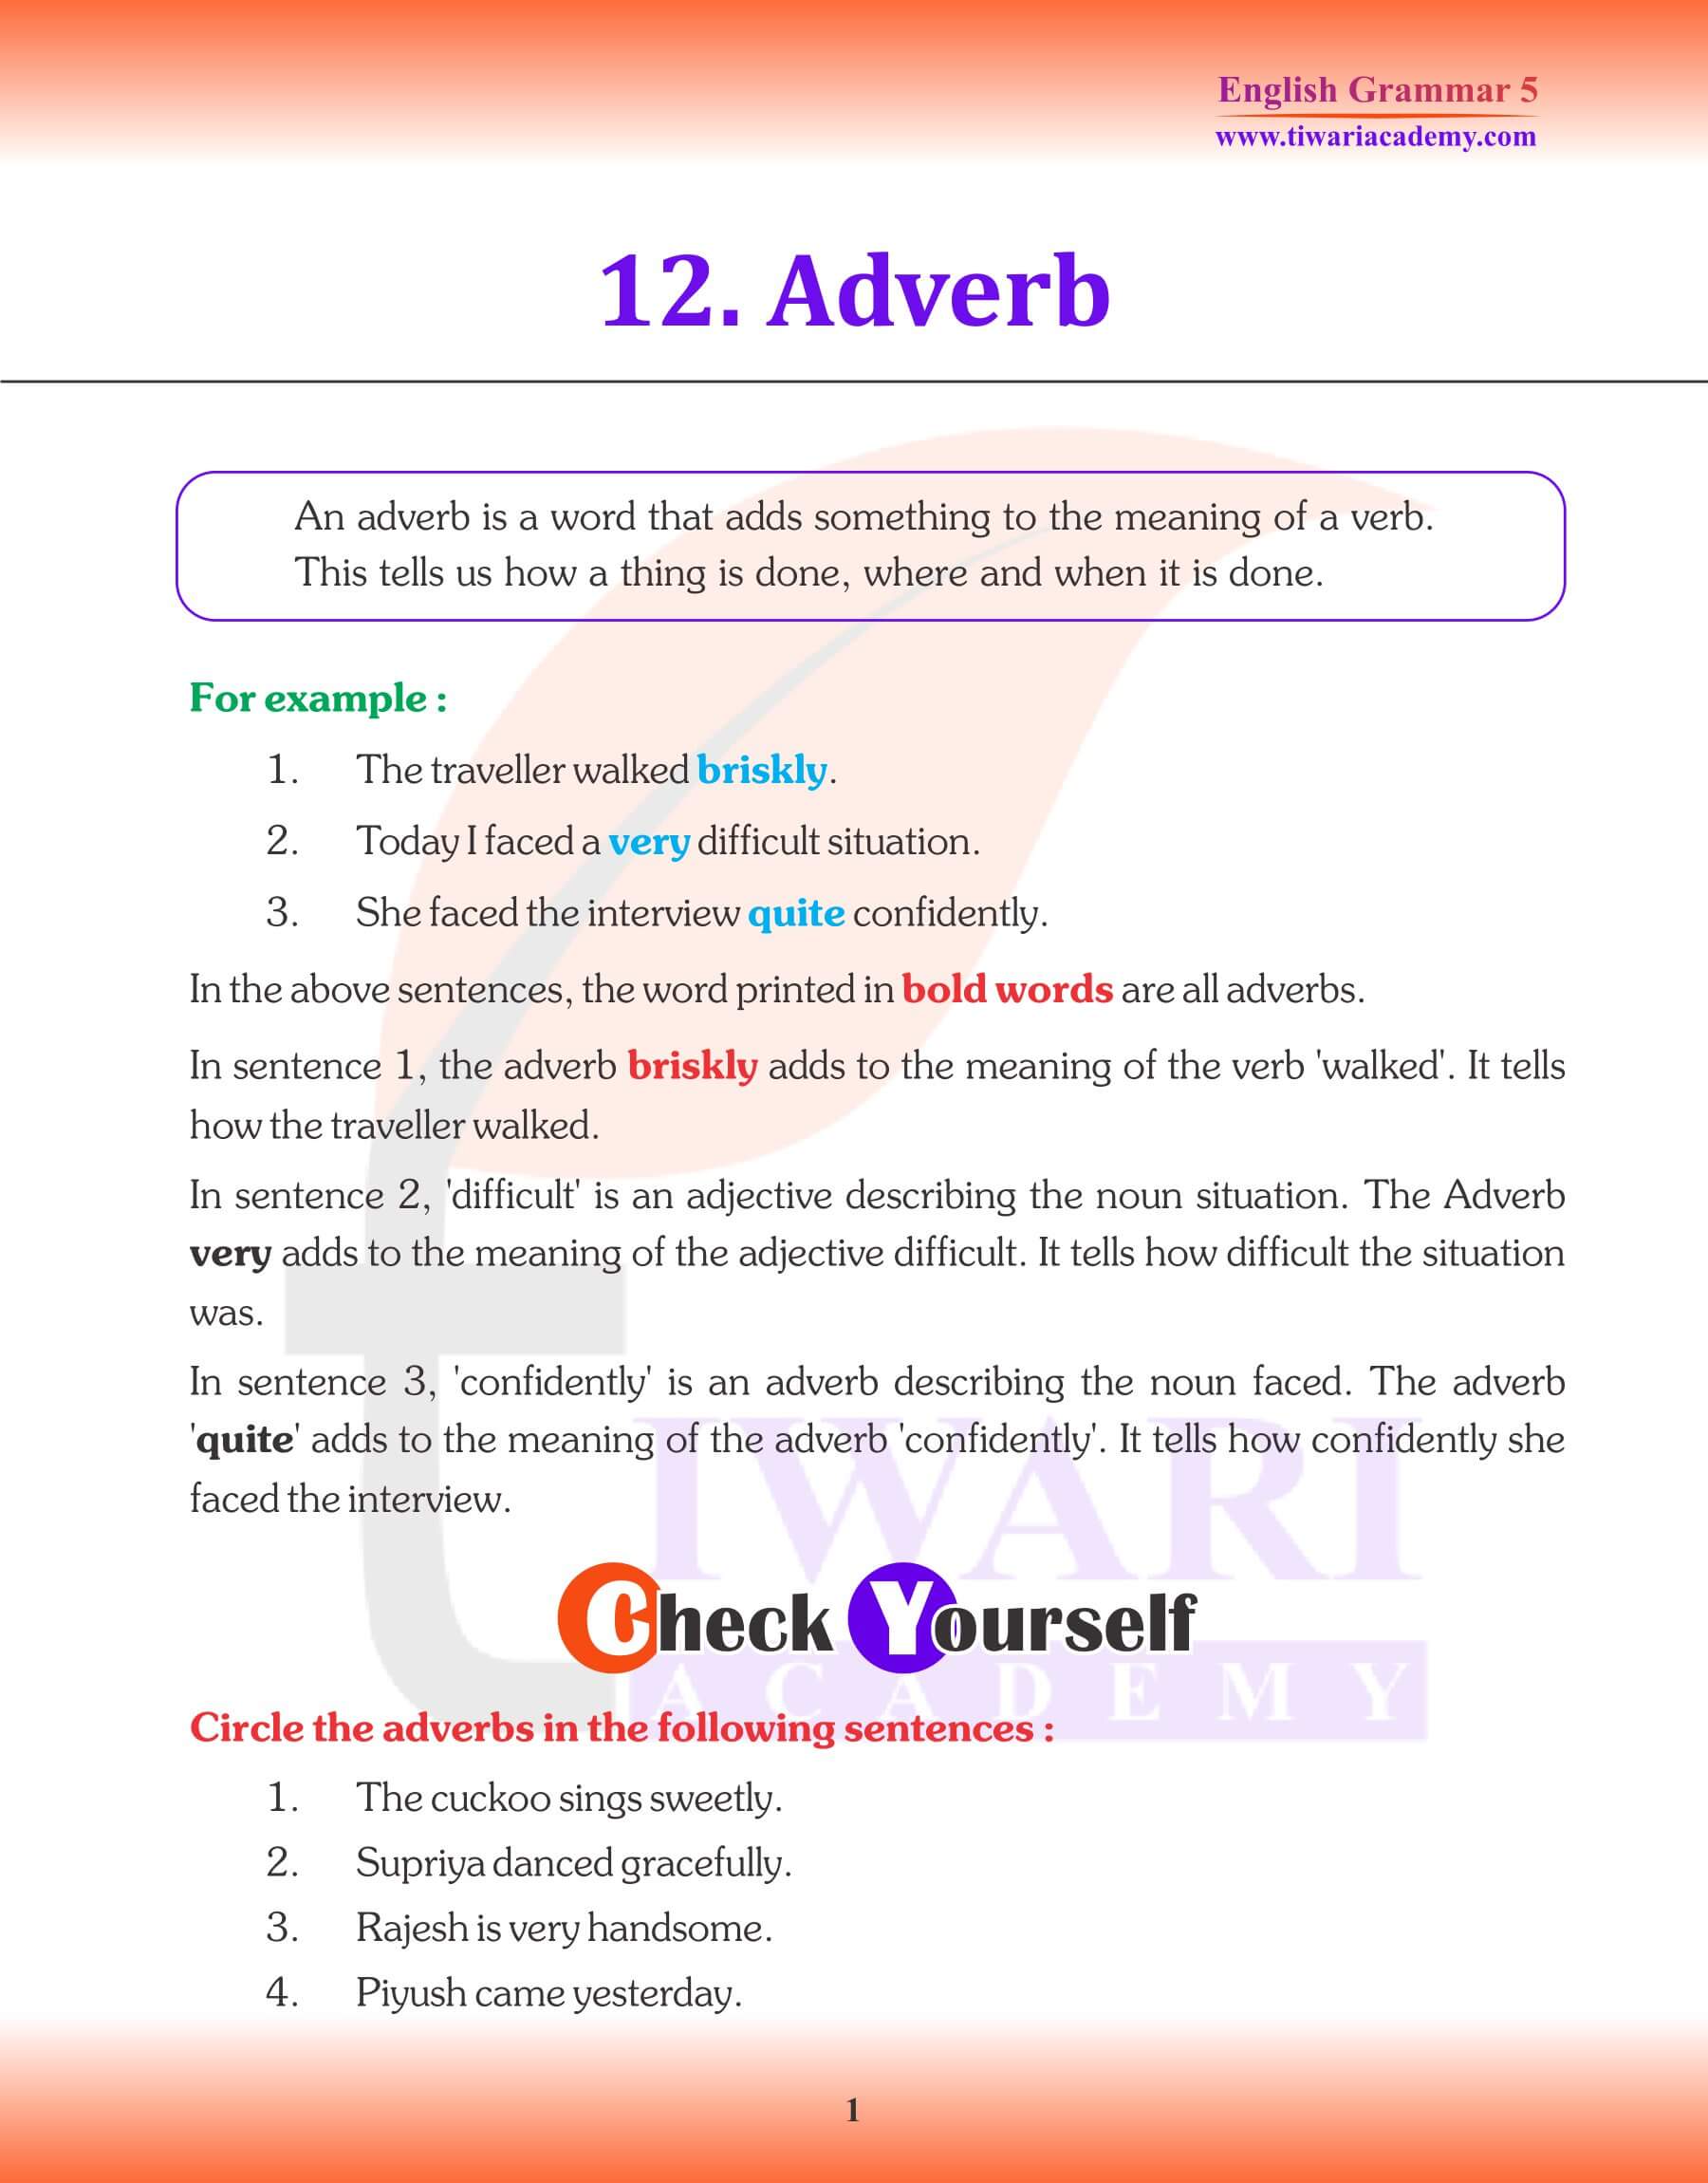 Class 5 English Grammar Adverbs Revision Book